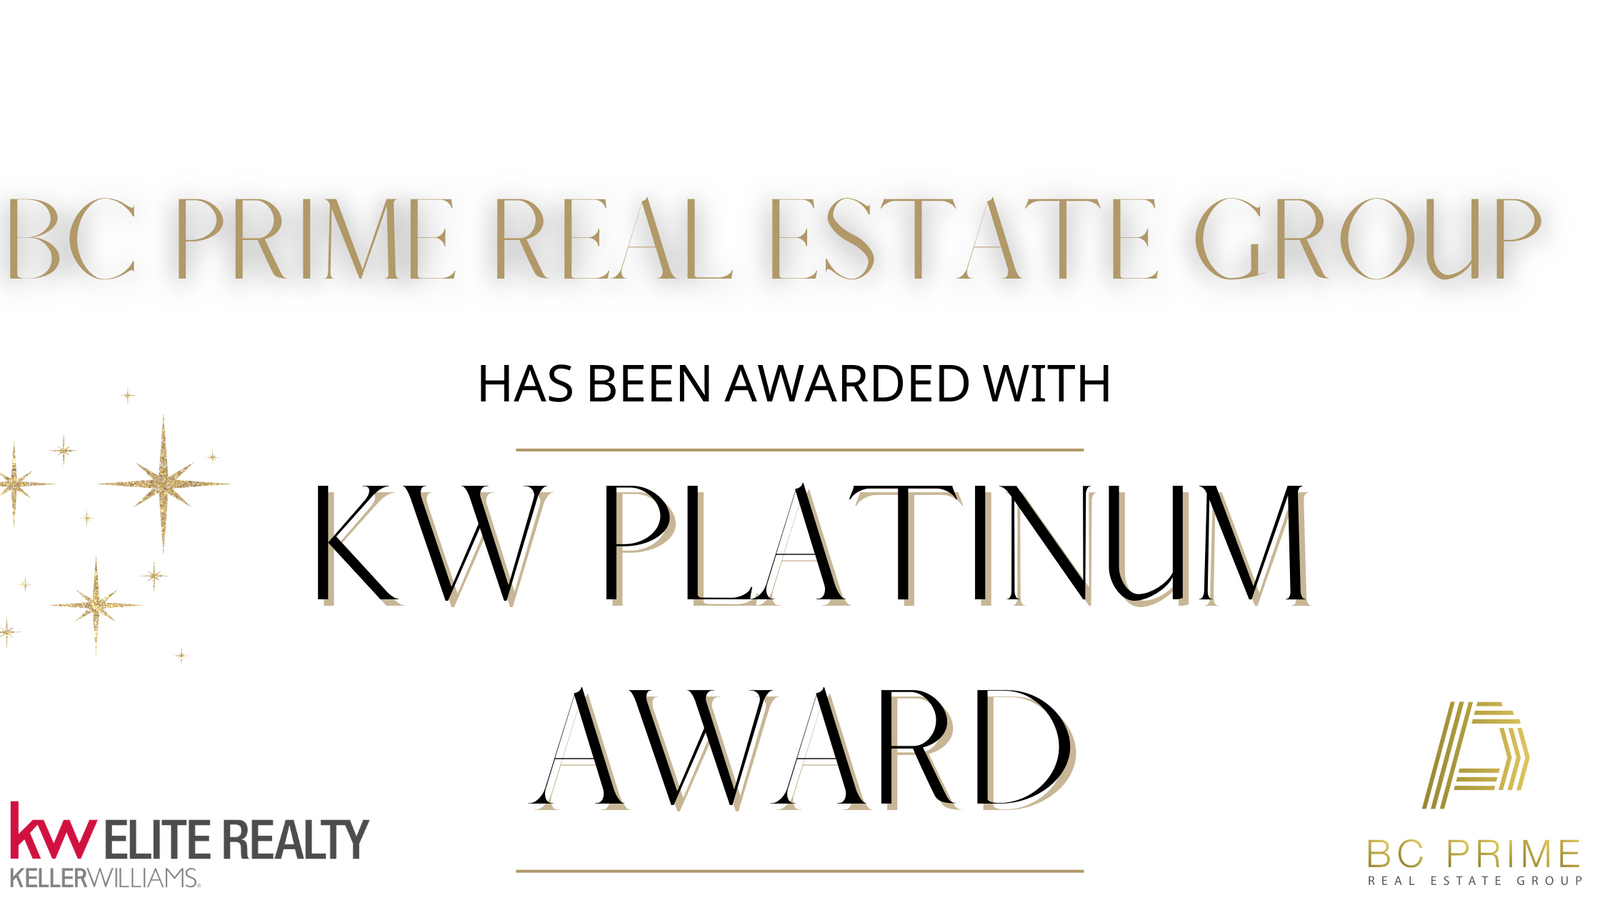 We are awarded the KW Platinum Award